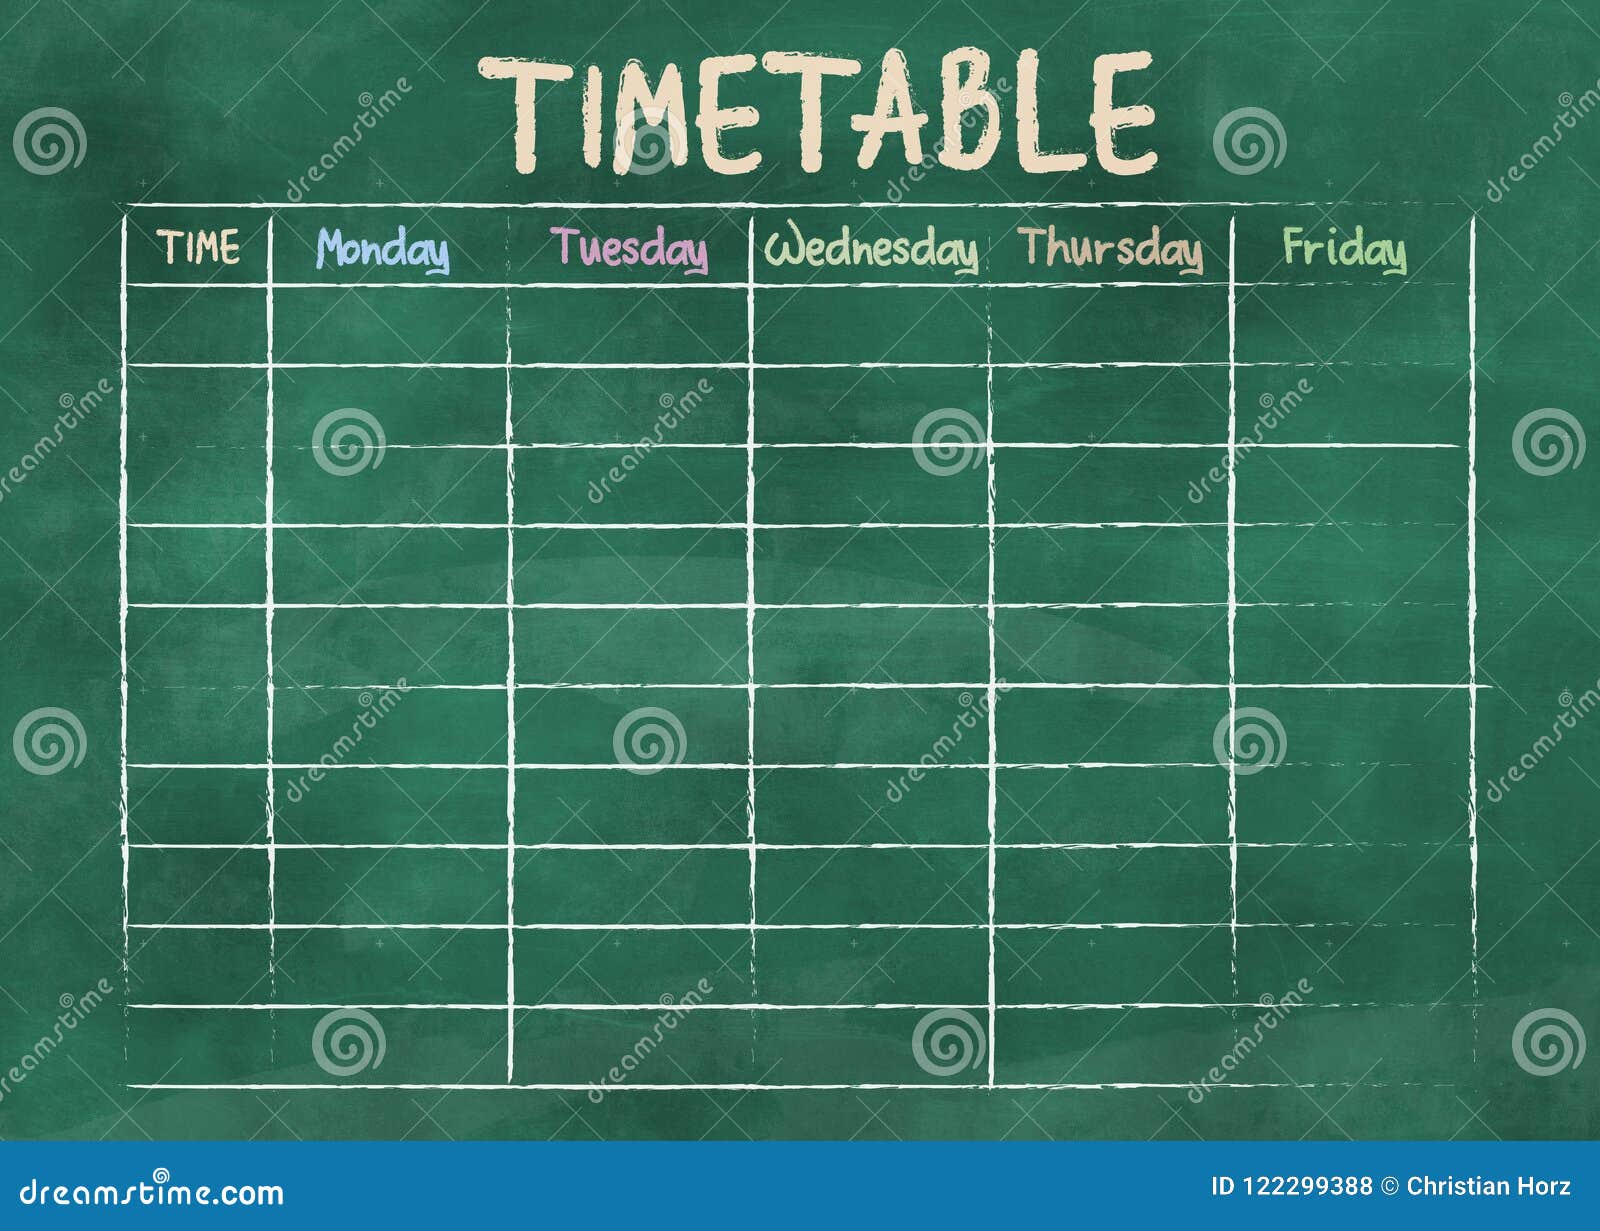 school timetable or class schedule on green chalkboard